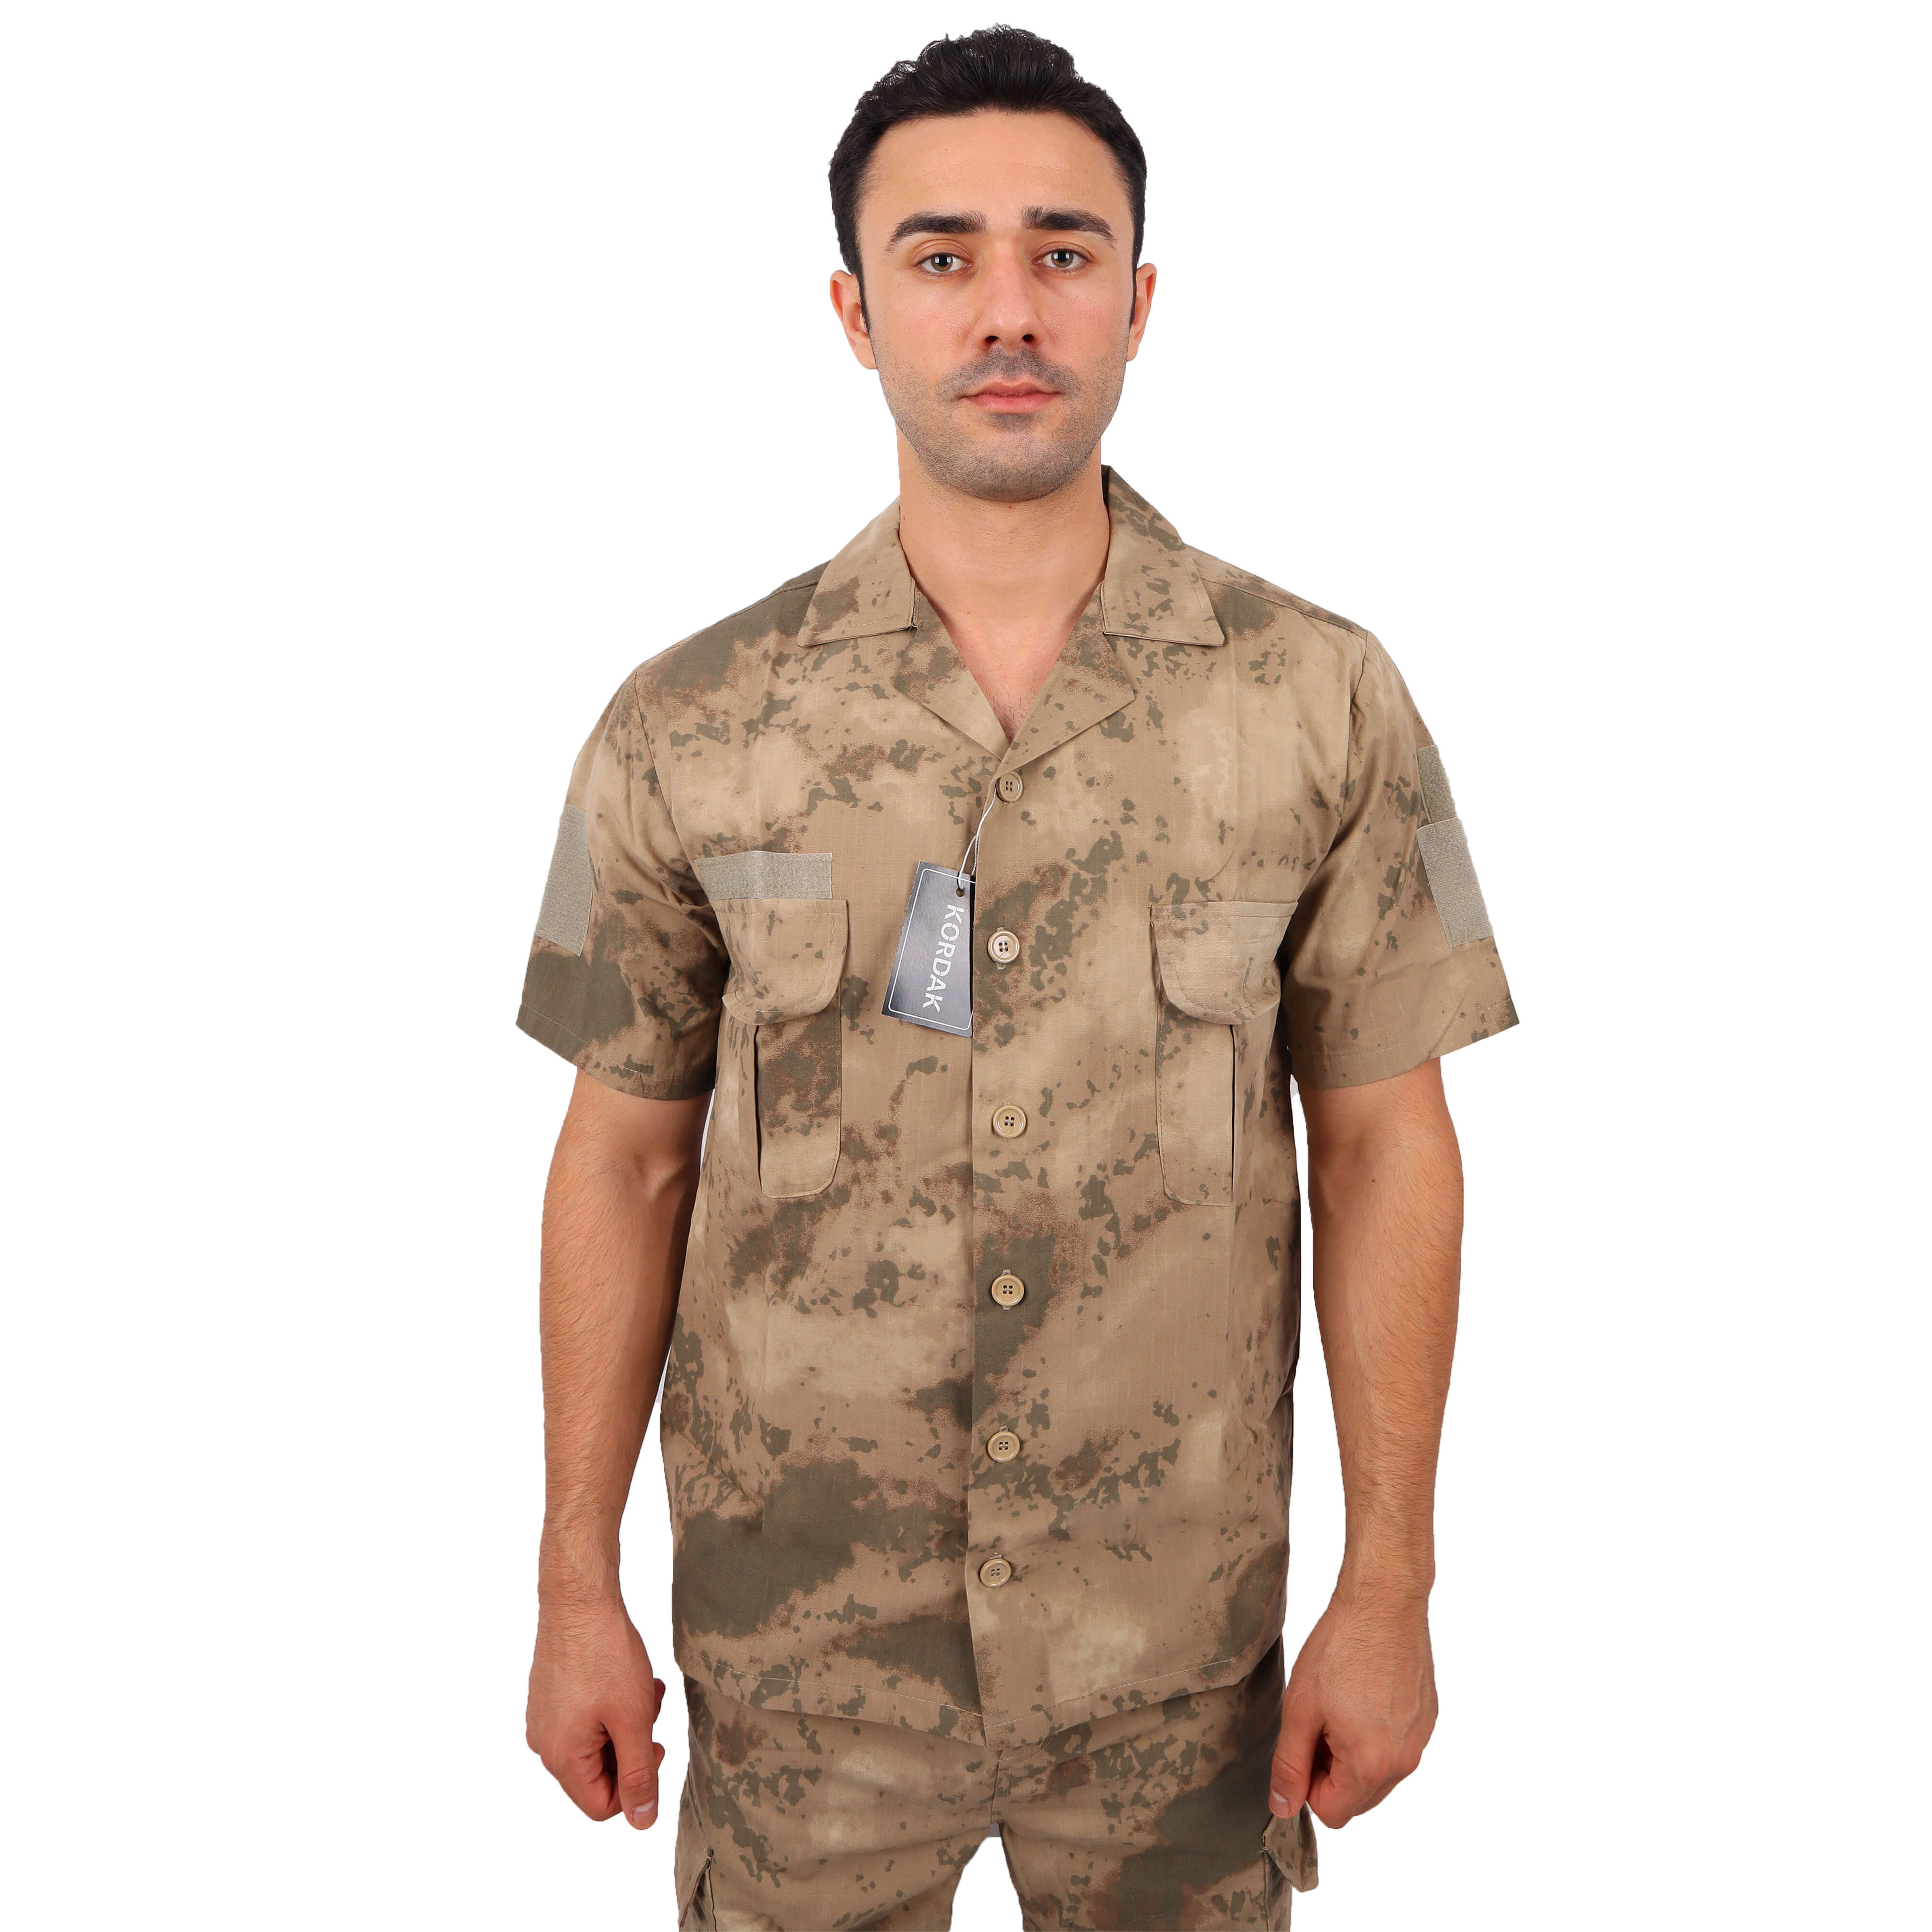 Deserton Camouflage Tactical Multi-Pocket Short Sleeve Shirt